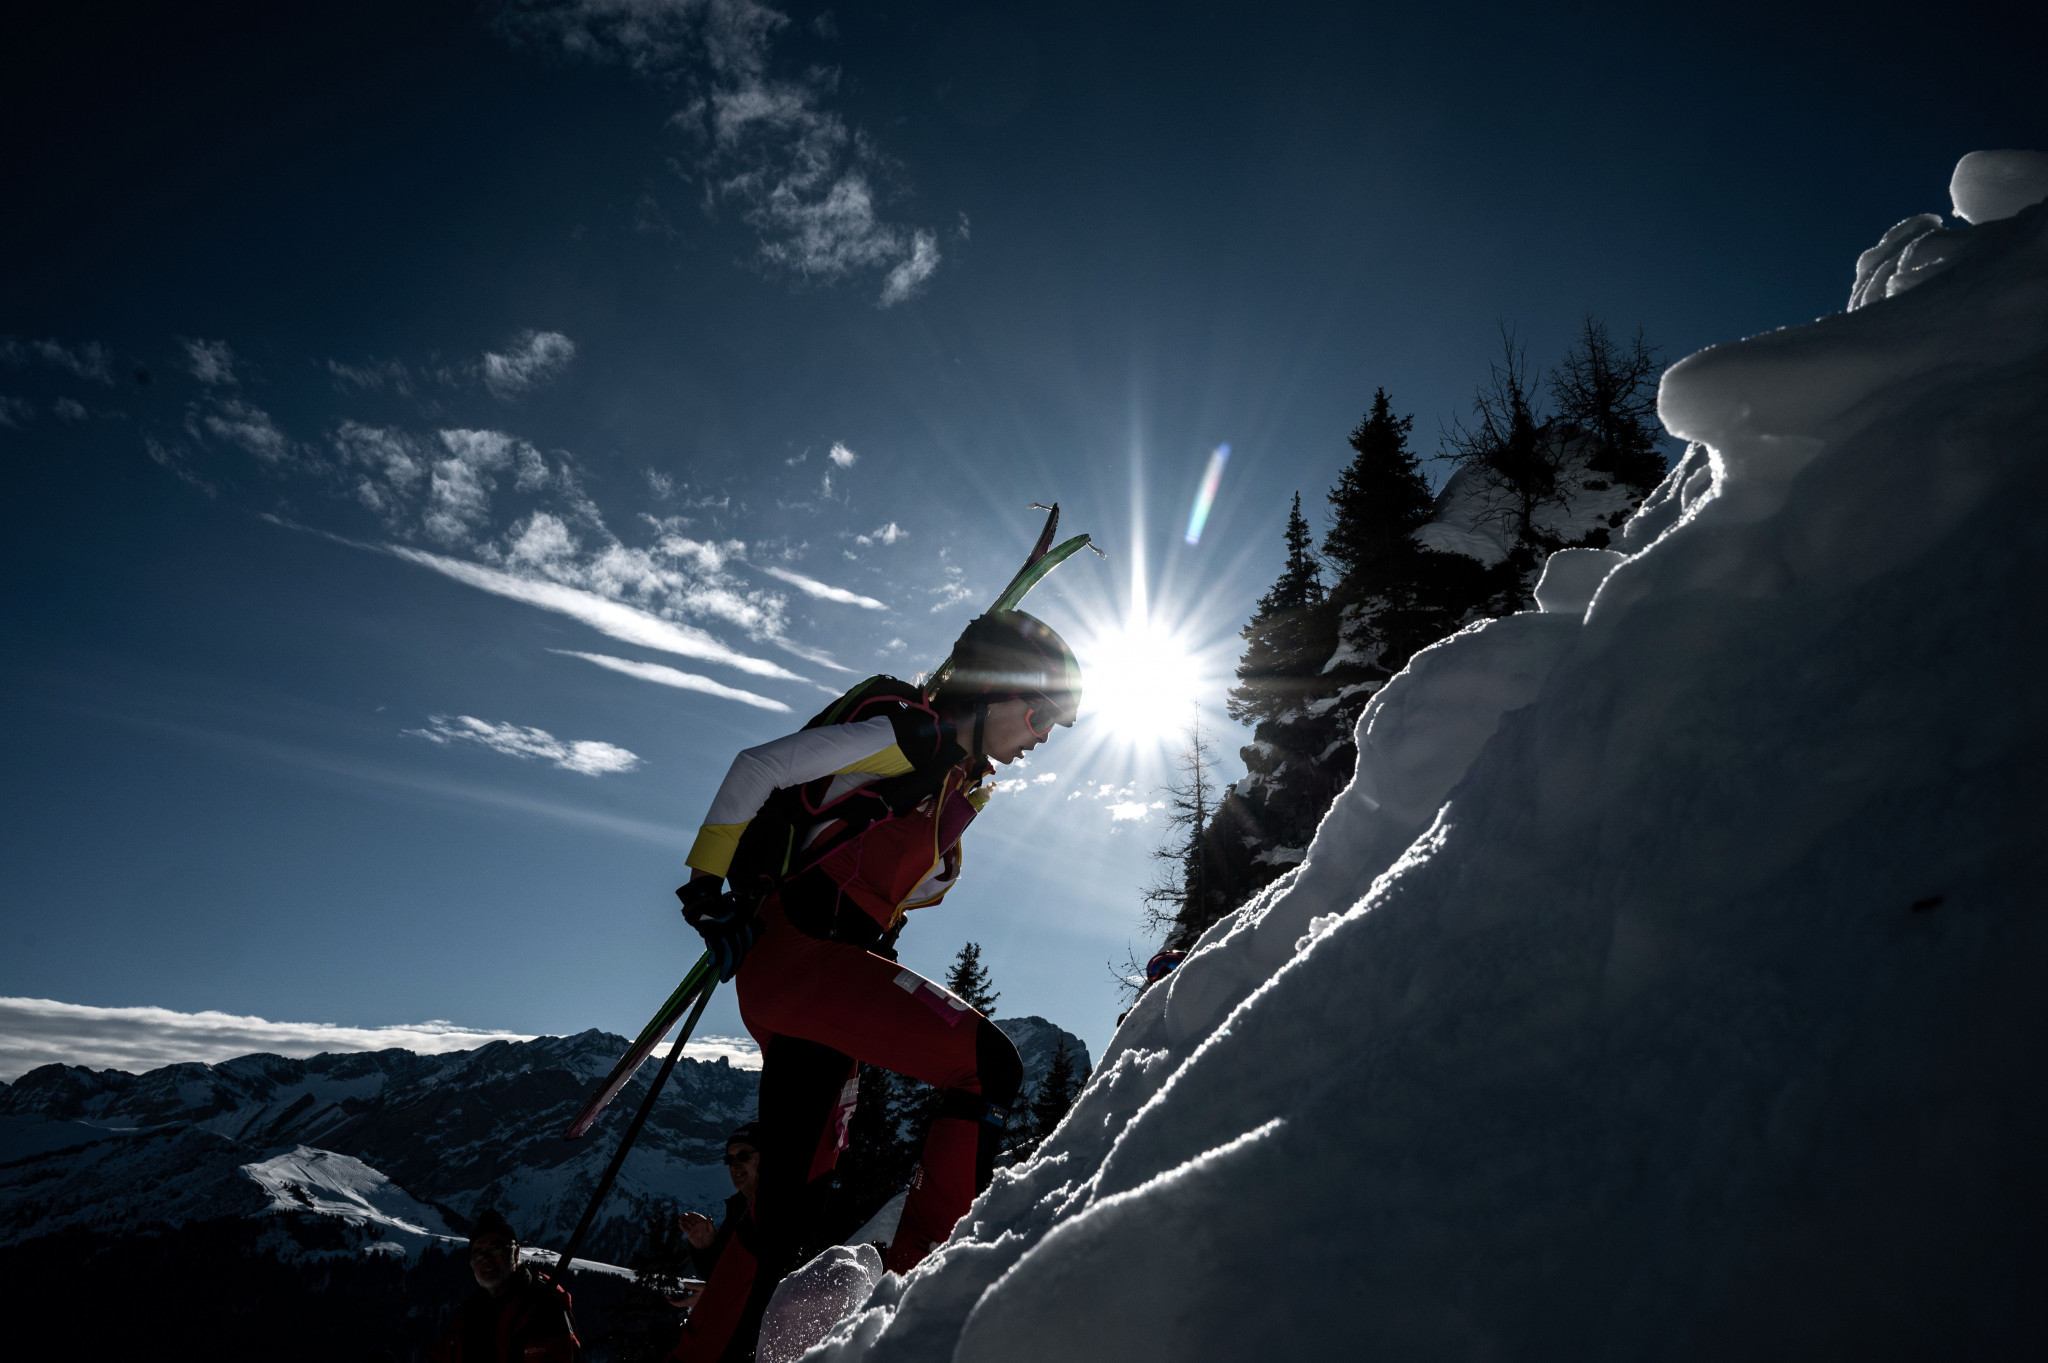 Ski mountaineering will make its debut at Milan Cortina 2026 ©Getty Images